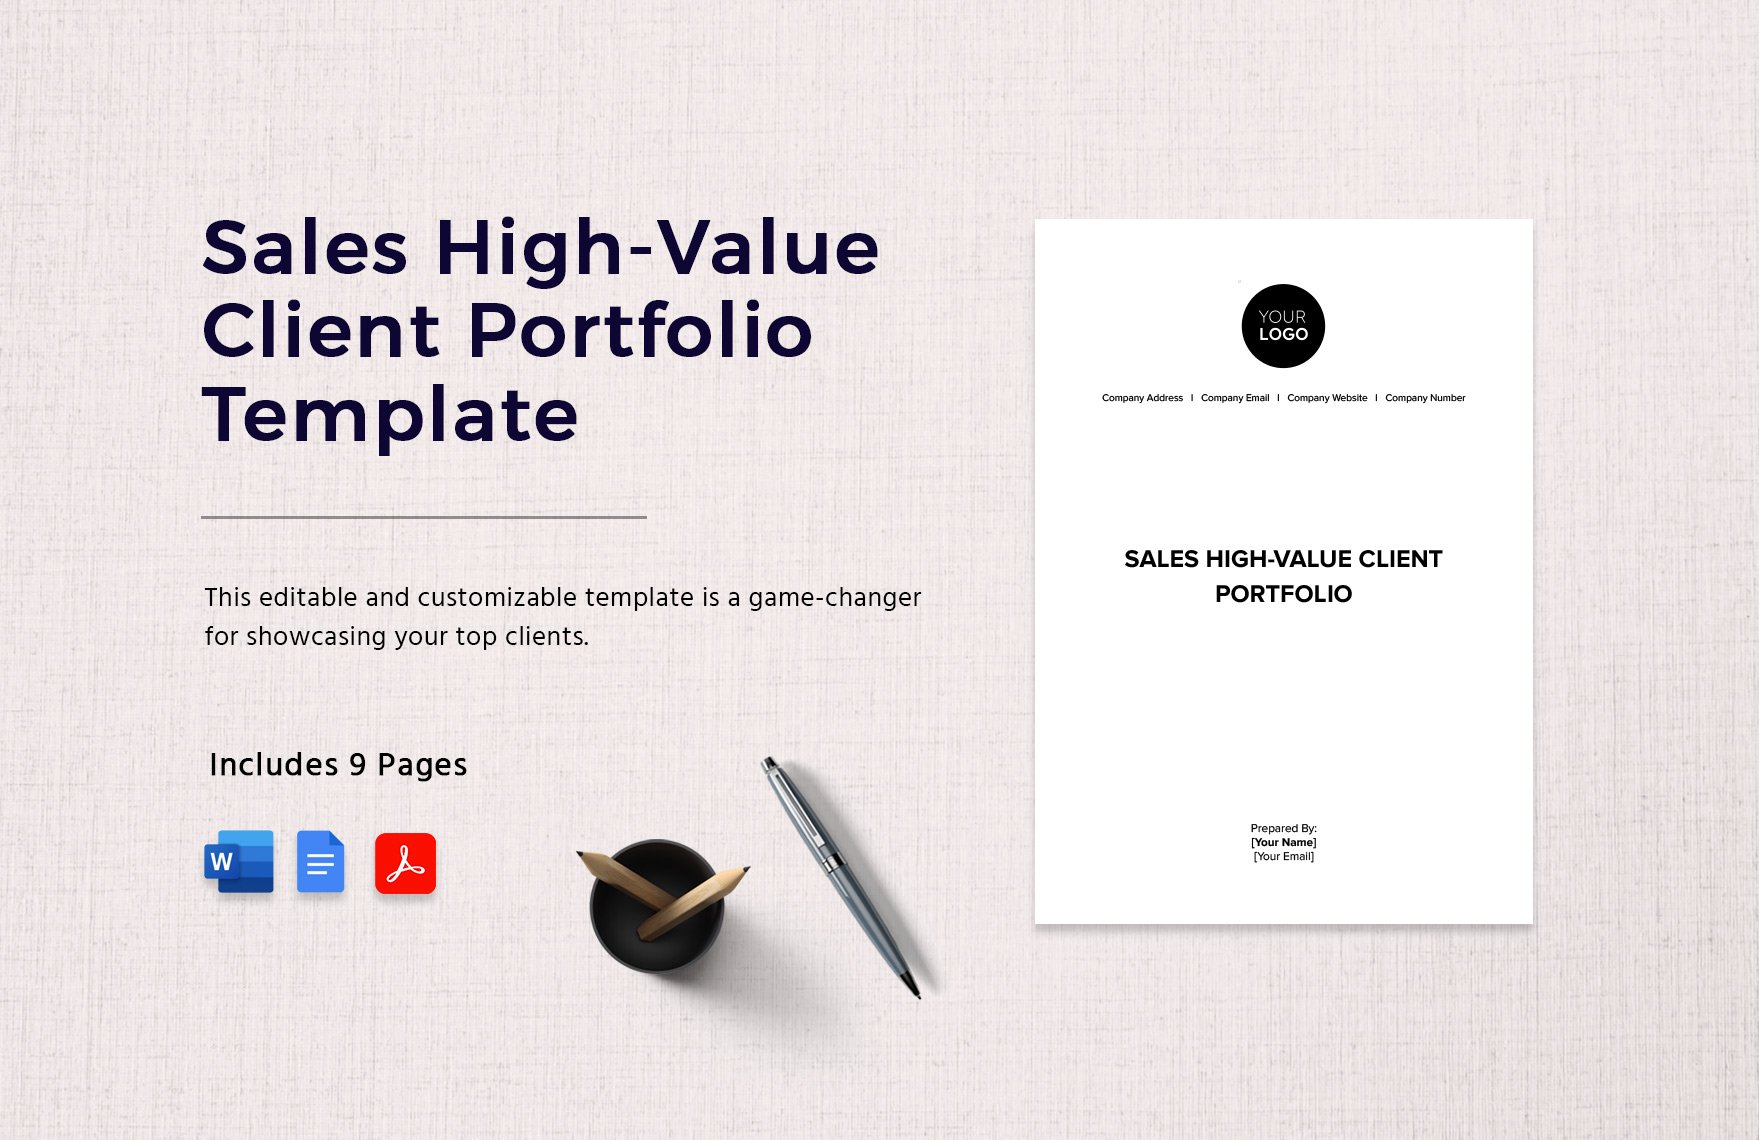 Sales High-Value Client Portfolio Template